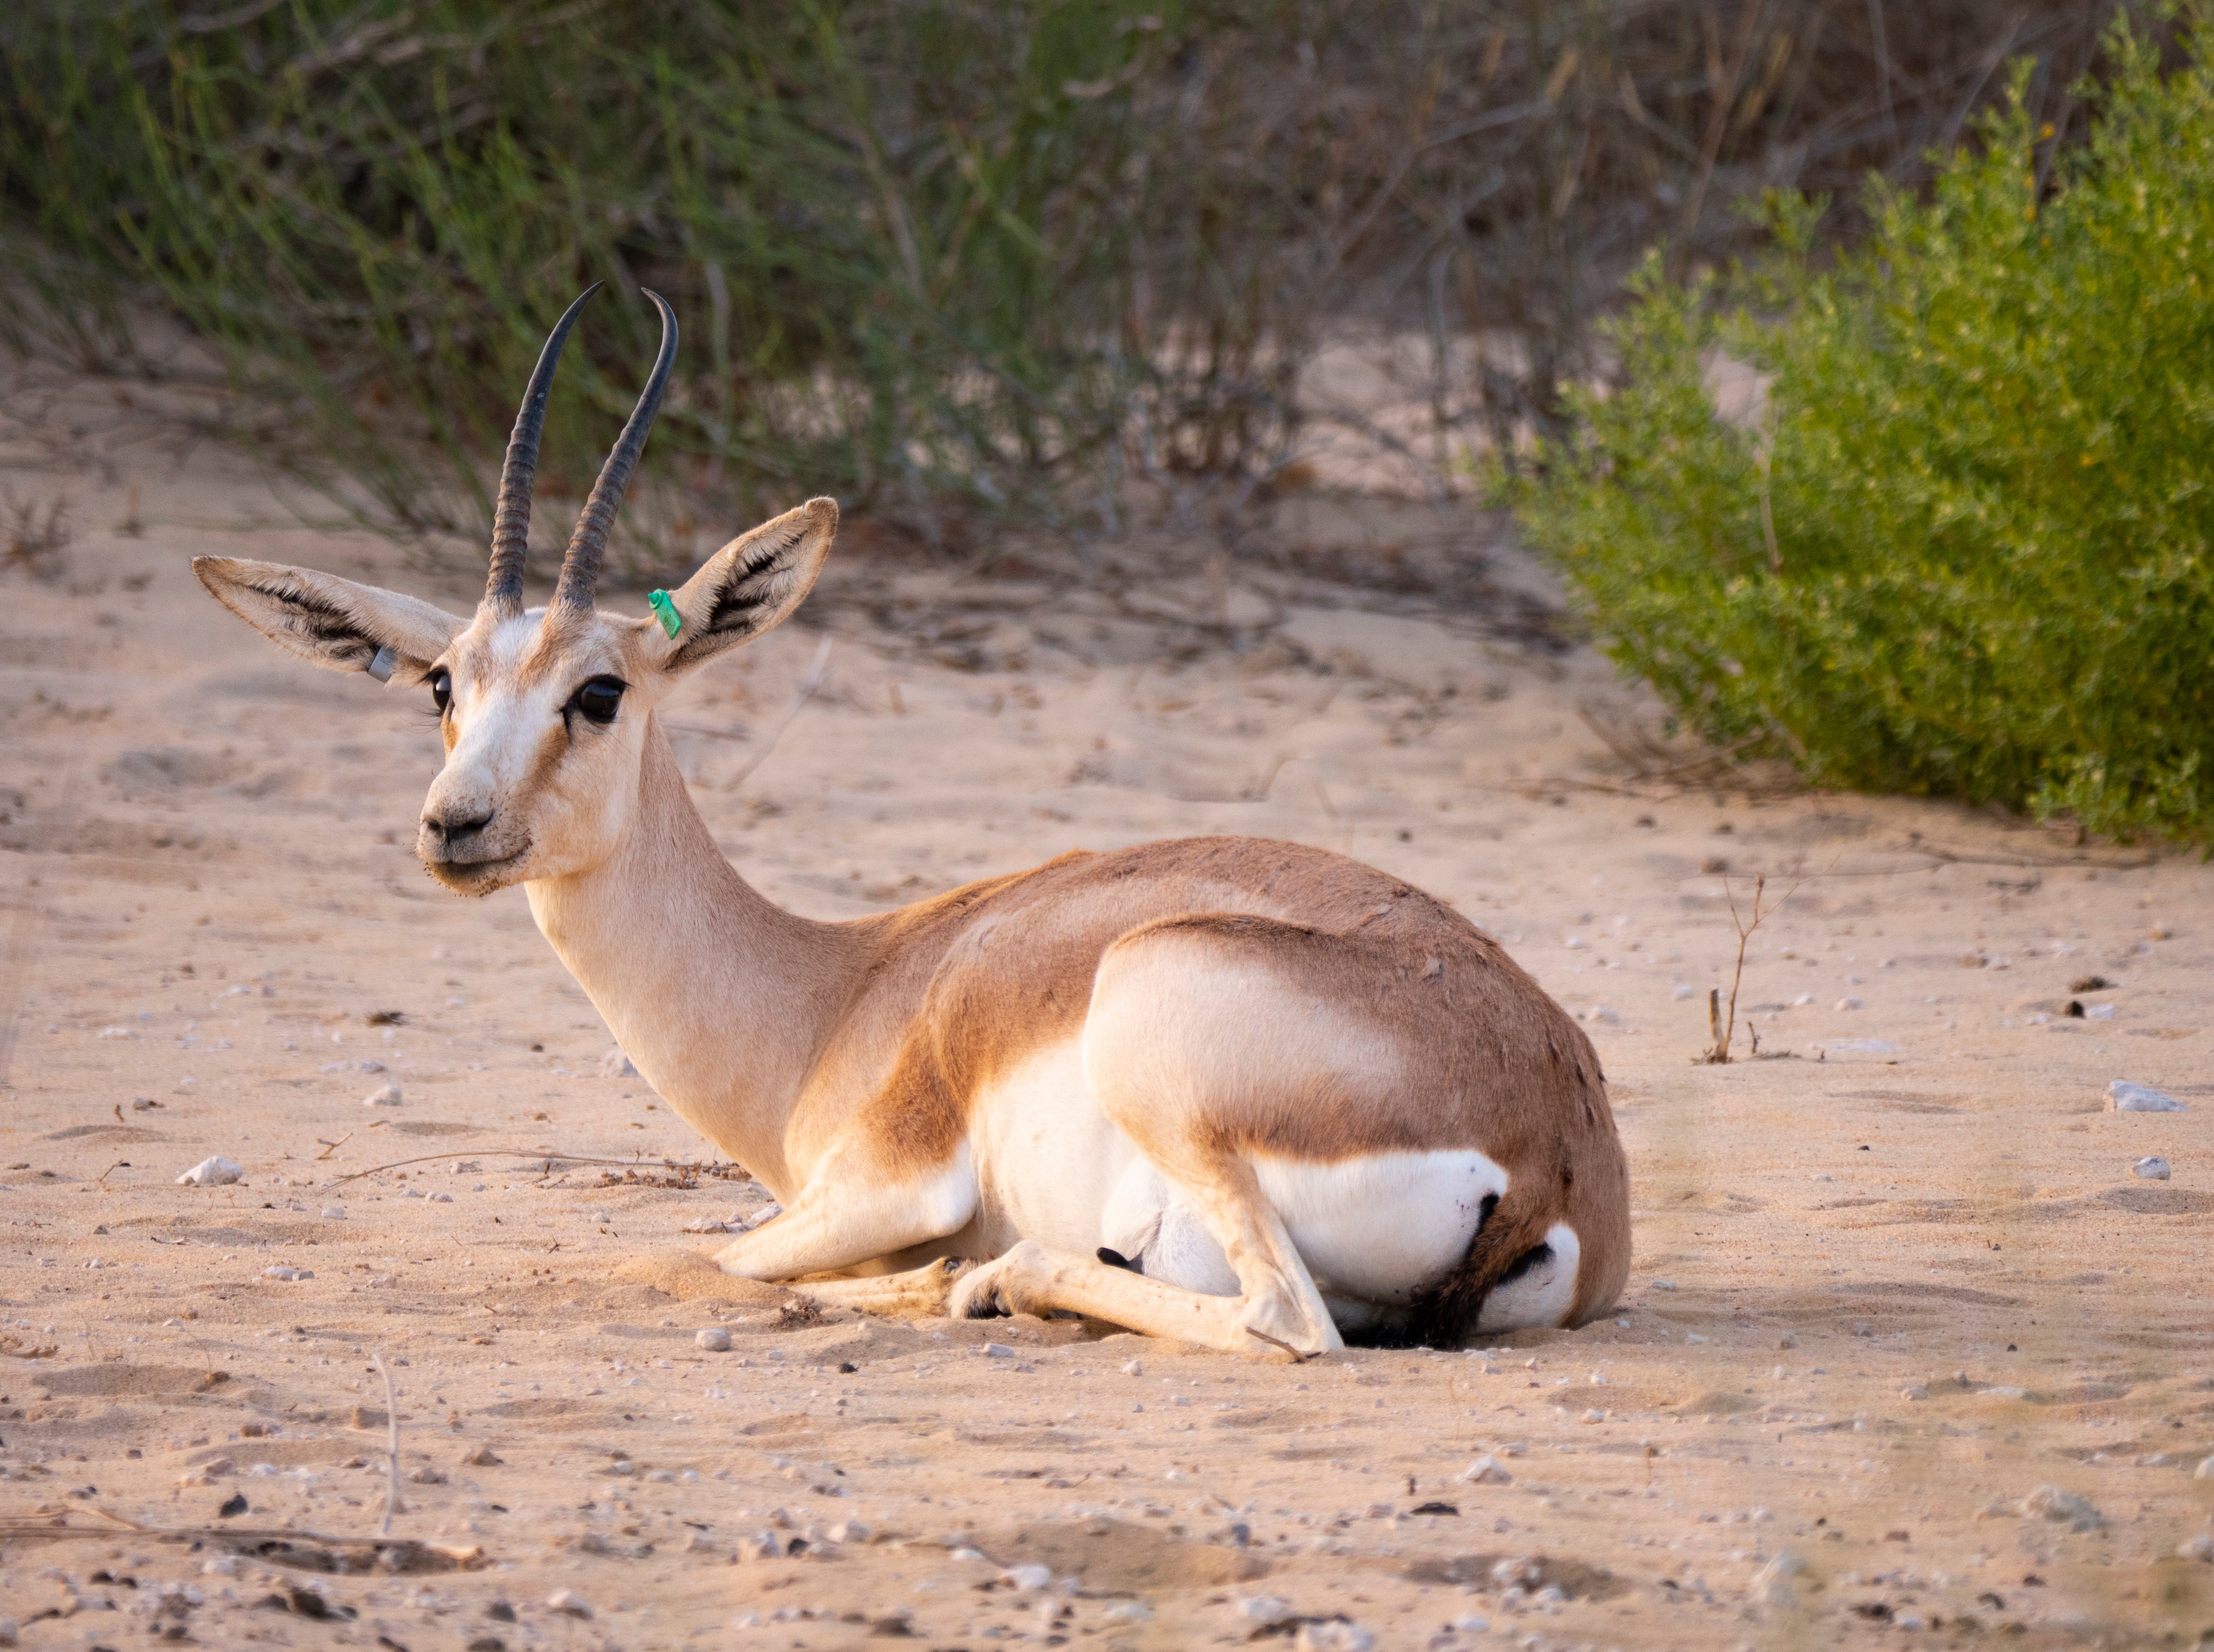 Sand gazelle in captive natural habitat conservation program in Saudi Arabia